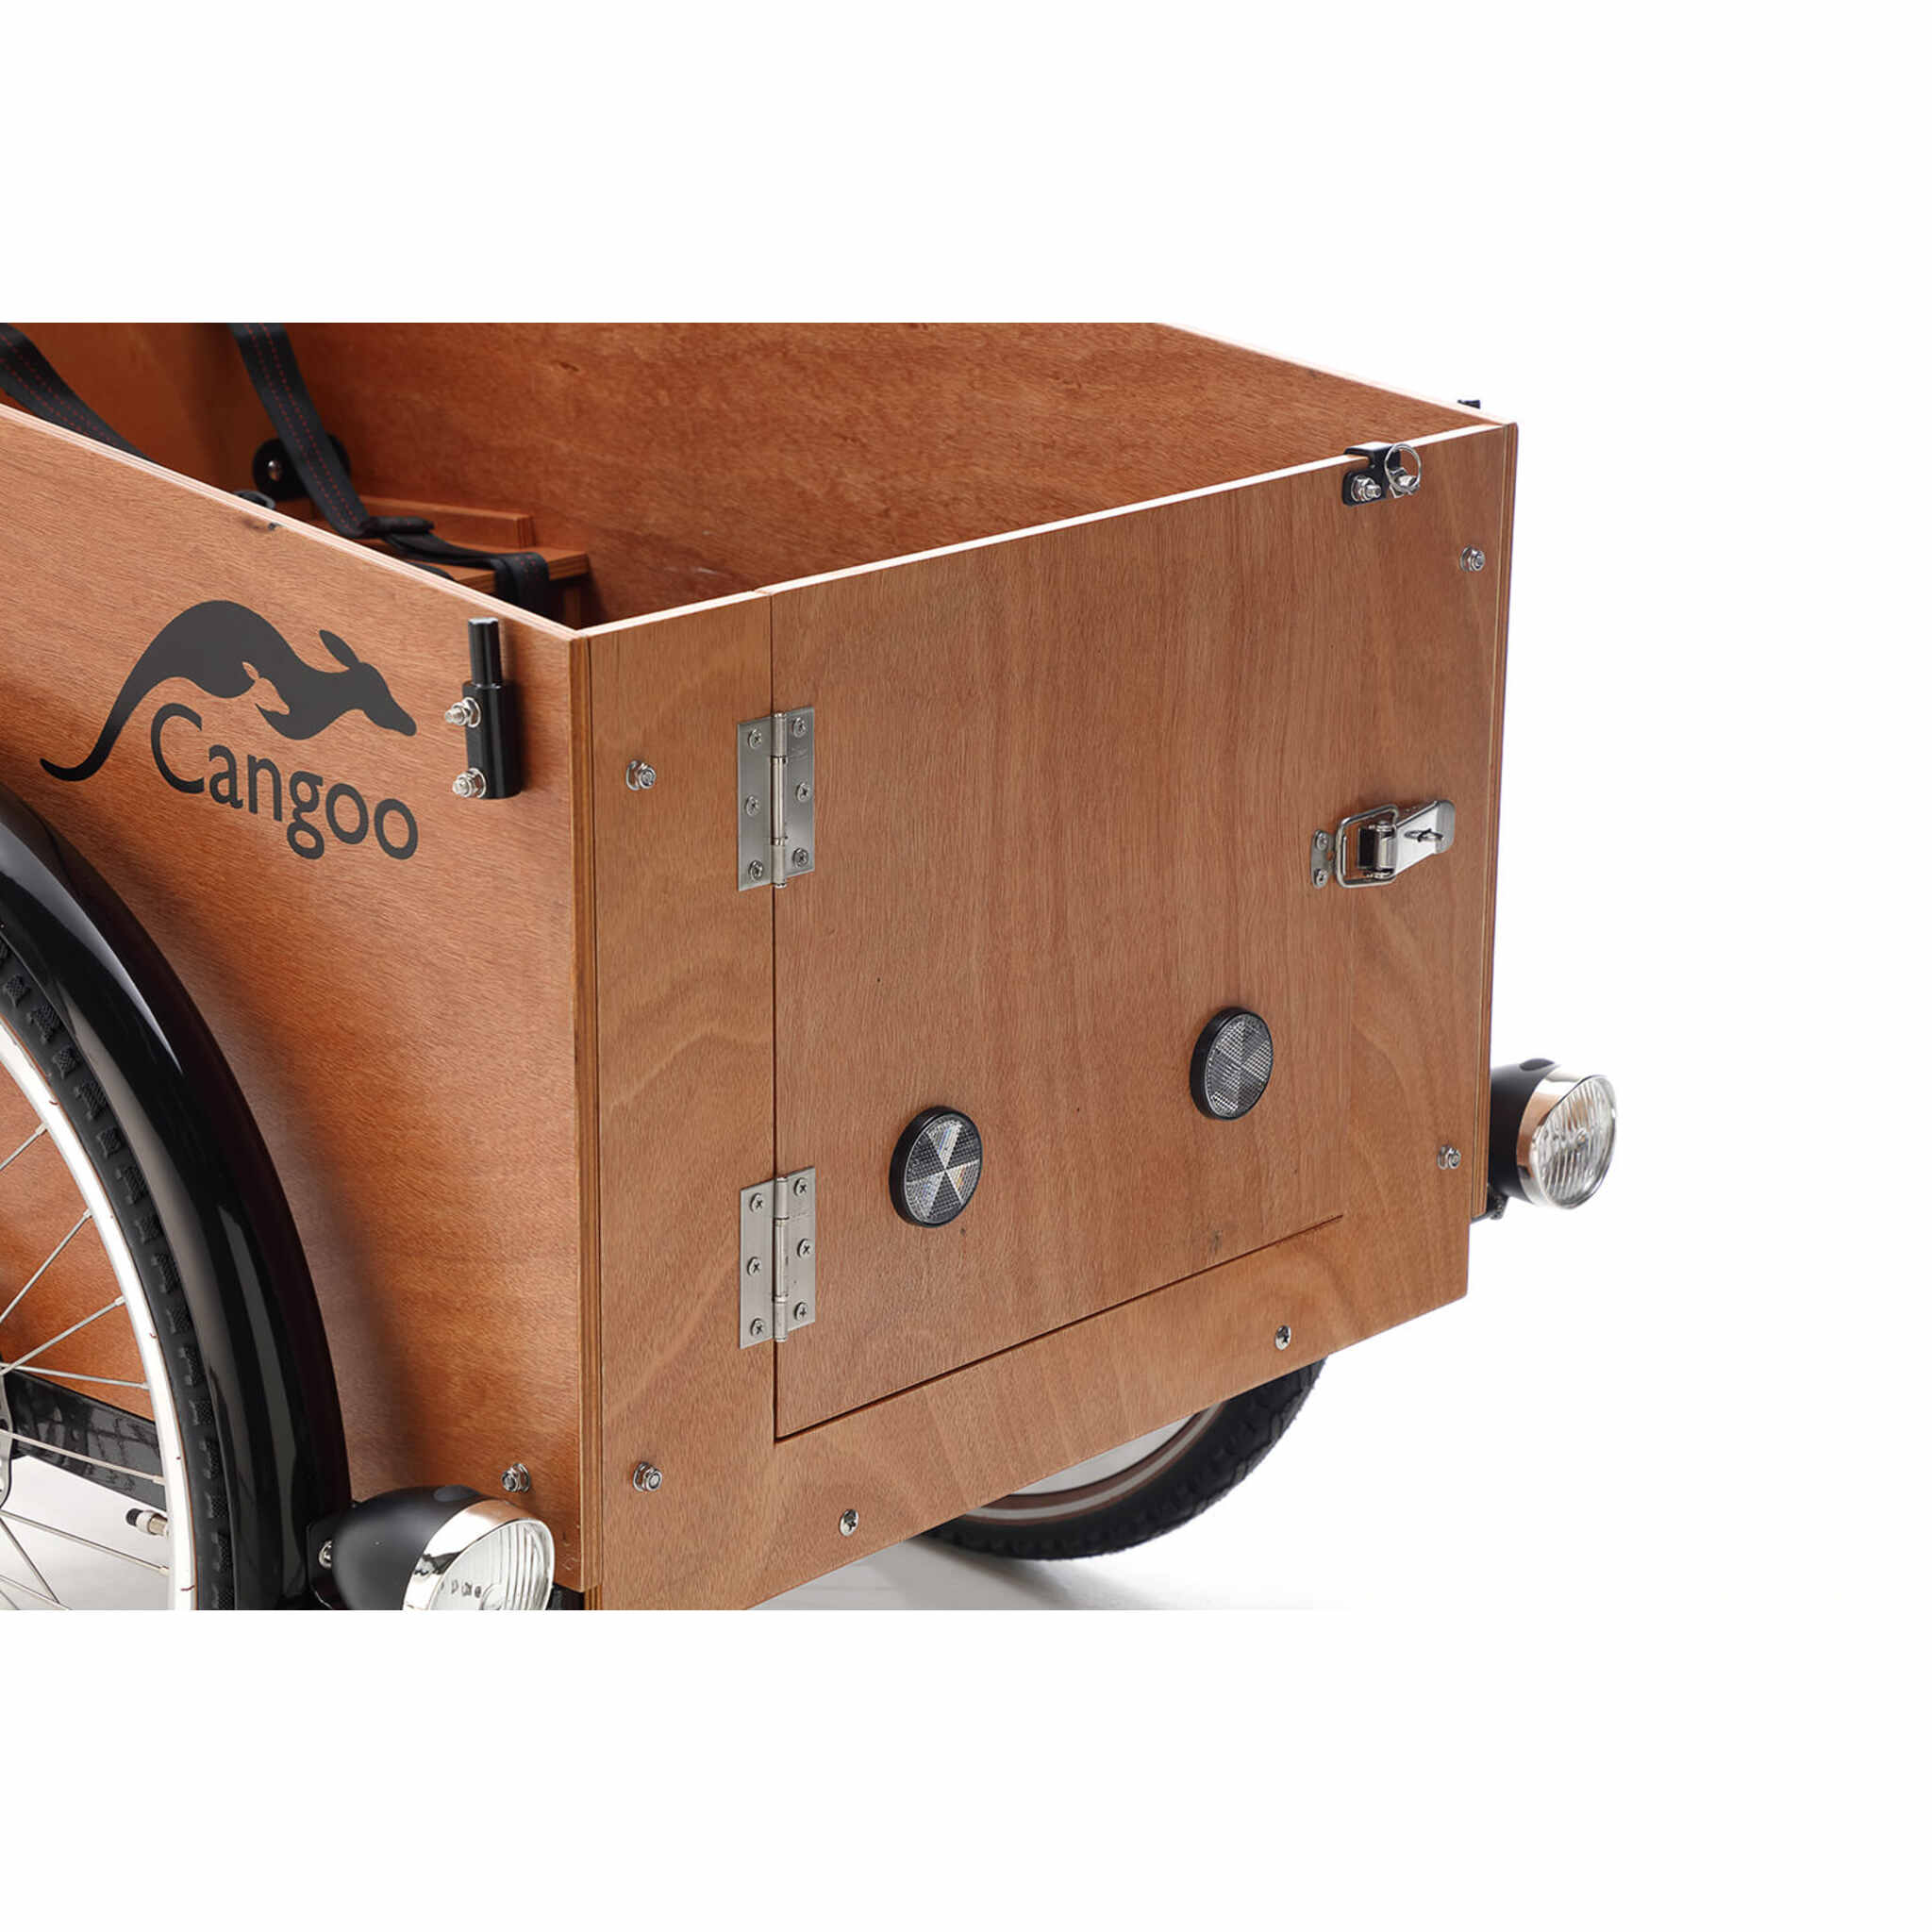 Cangoo Easy E - modernes E-Lastenrad mit einer großen Transportbox - MabeaMobility